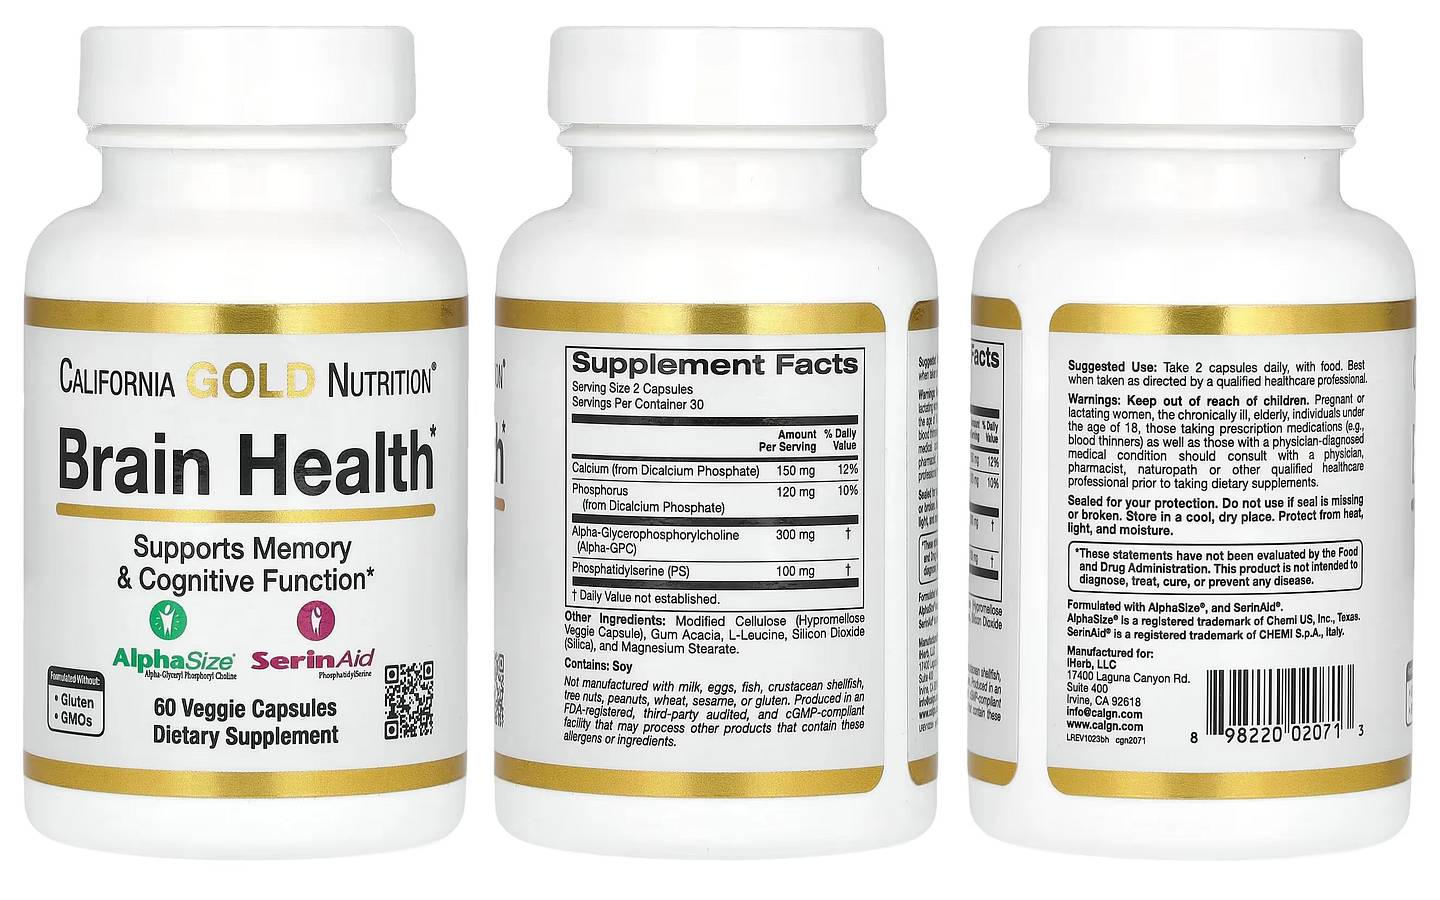 California Gold Nutrition, Brain Health packaging